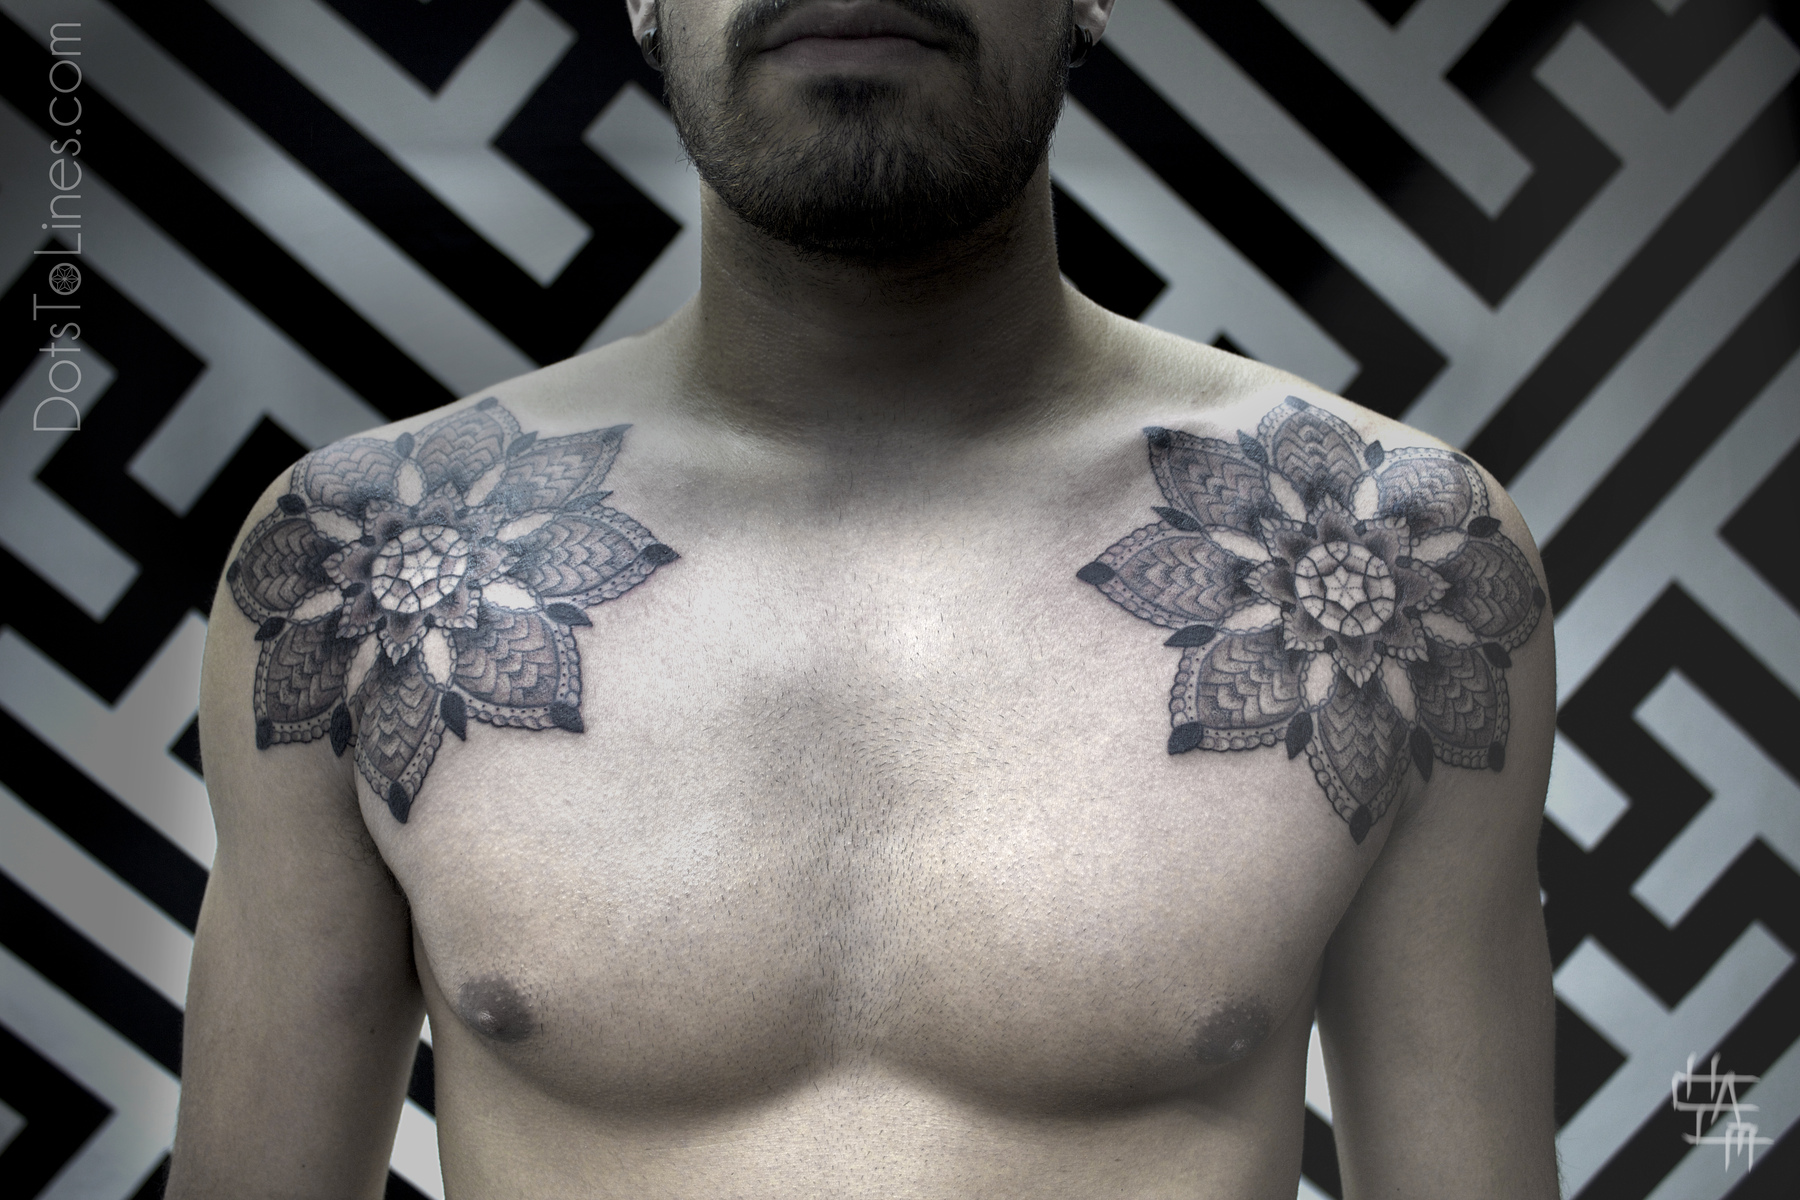 netloid_berlin-based-israeli-tattoo-artist-chaim-machlev-makes-complex-line-based-works-that-weave-across-the-skin7.jpg